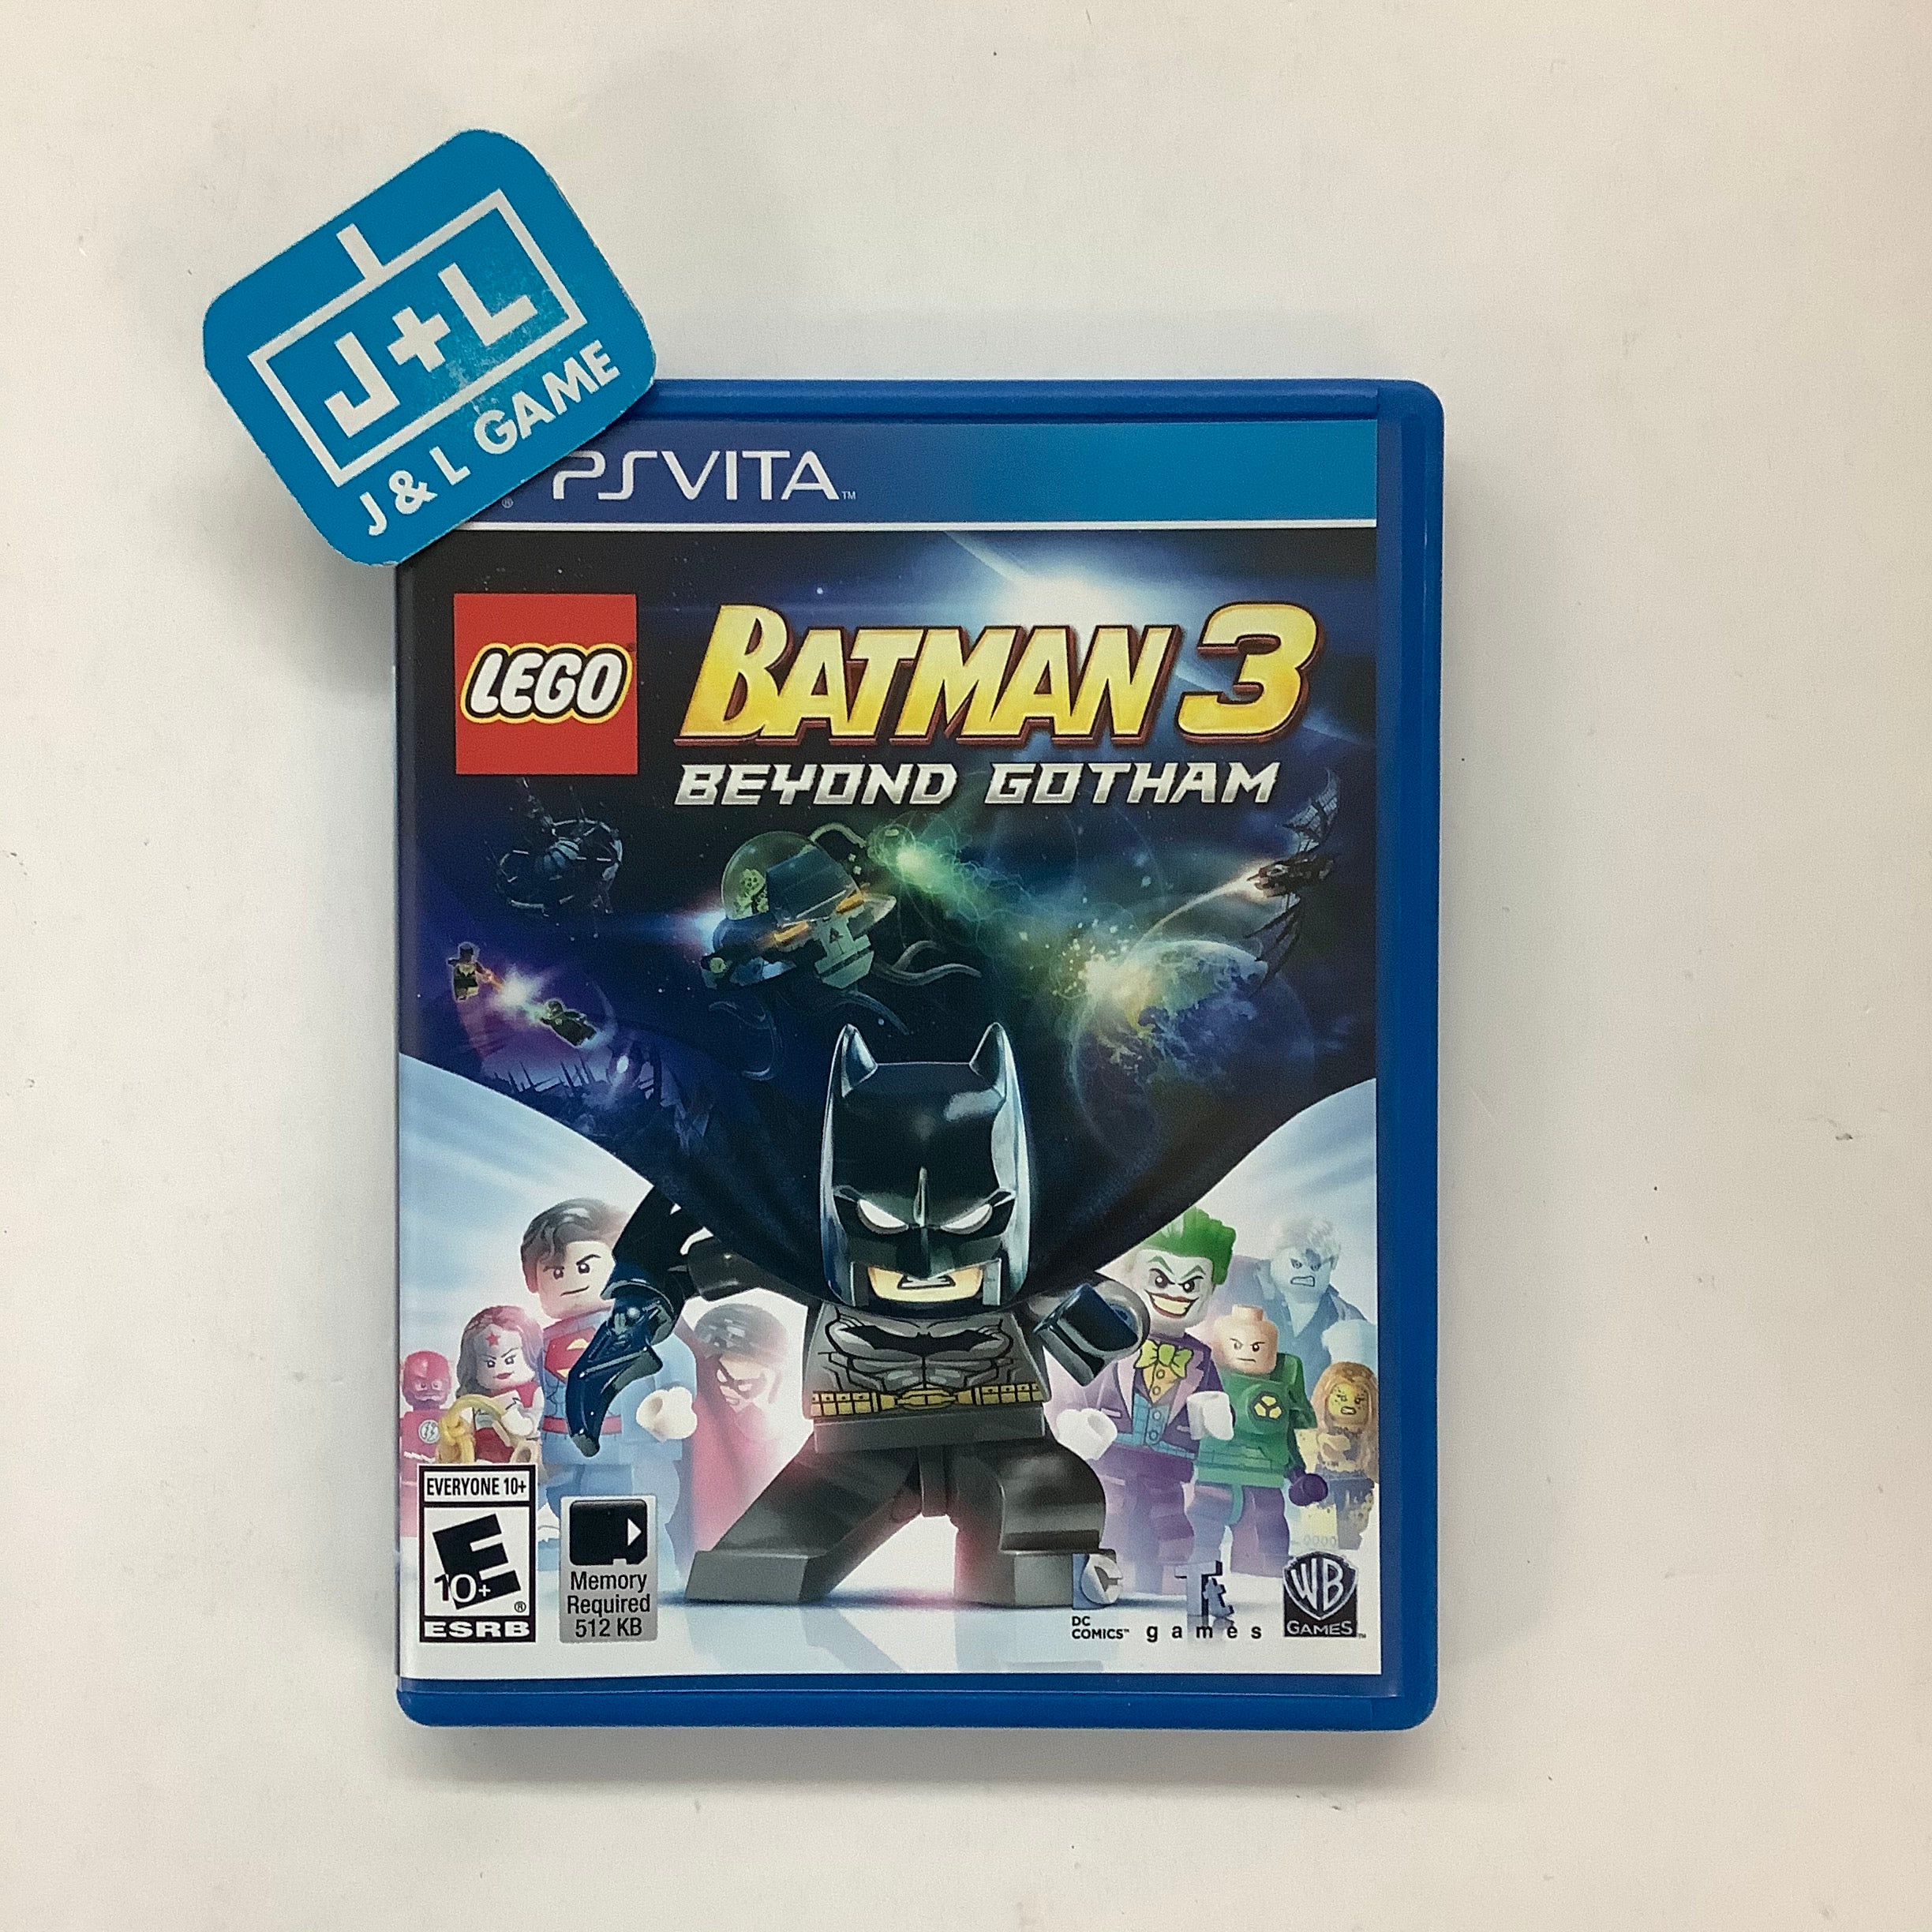 LEGO Batman 3: Beyond Gotham - (PSV) PlayStation Vita [Pre-Owned] Video Games WB Games   